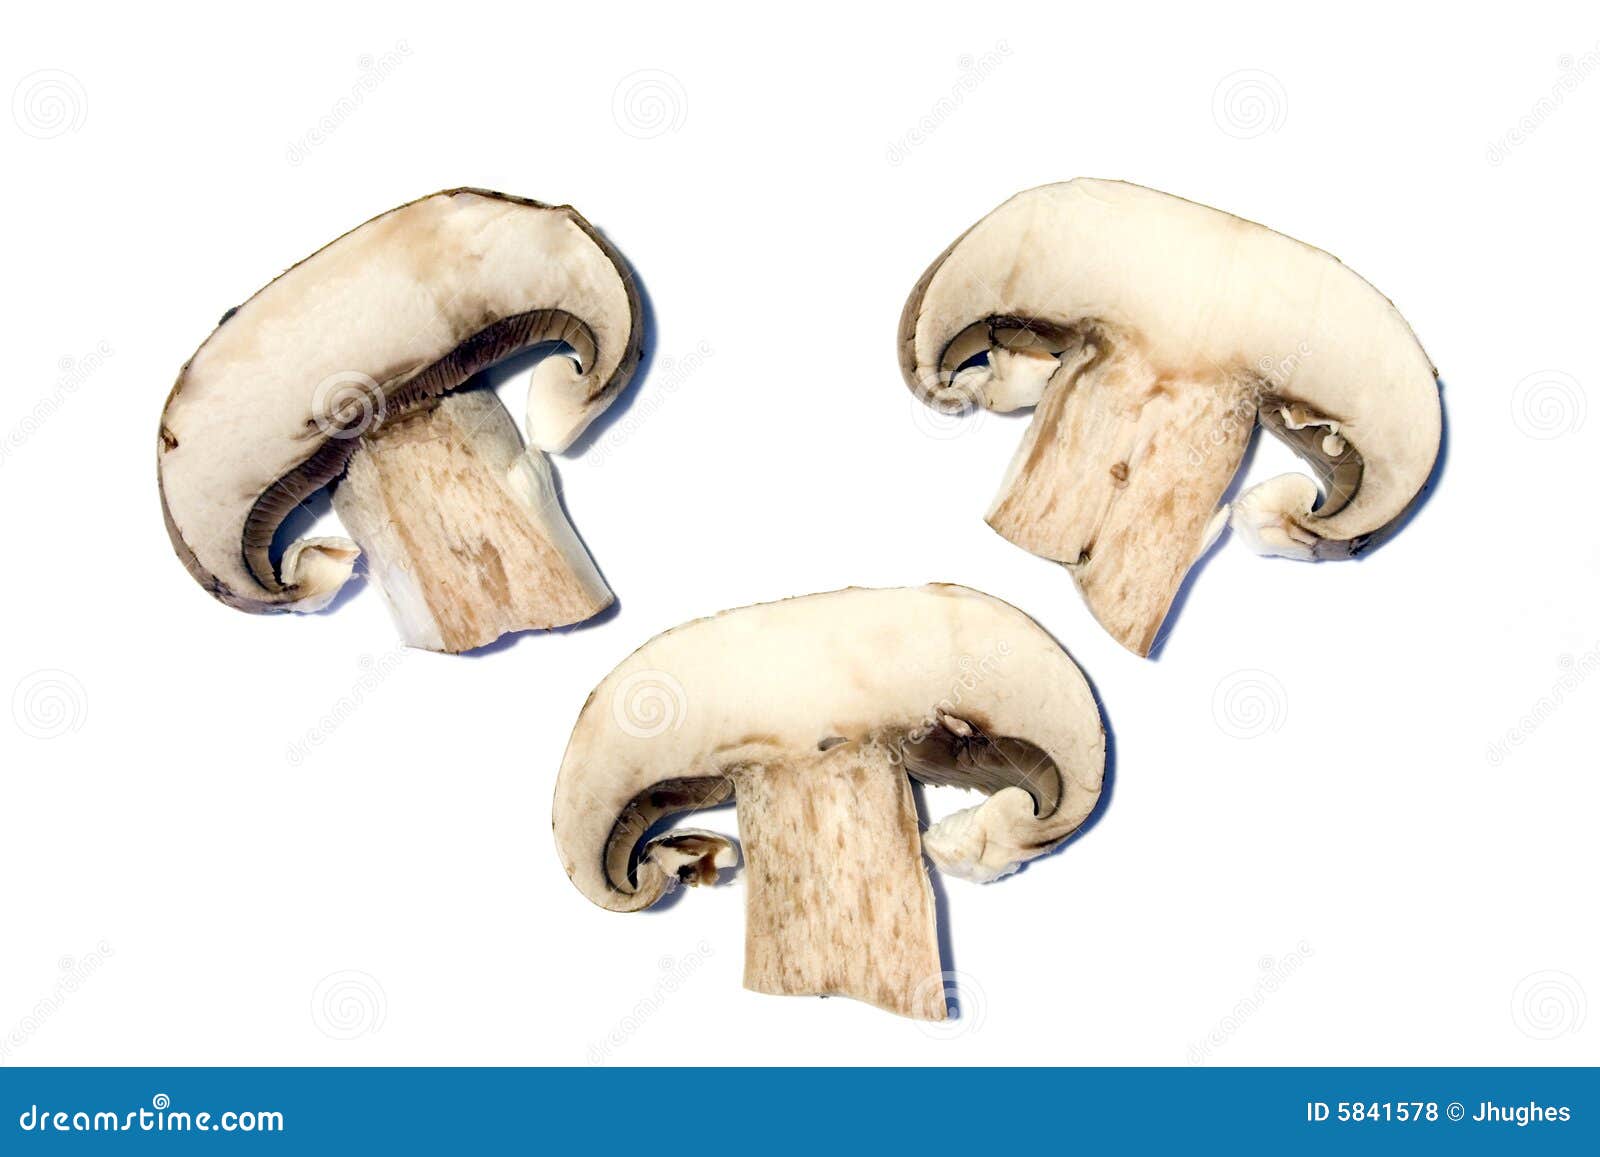 mushroom slice clip art - photo #34